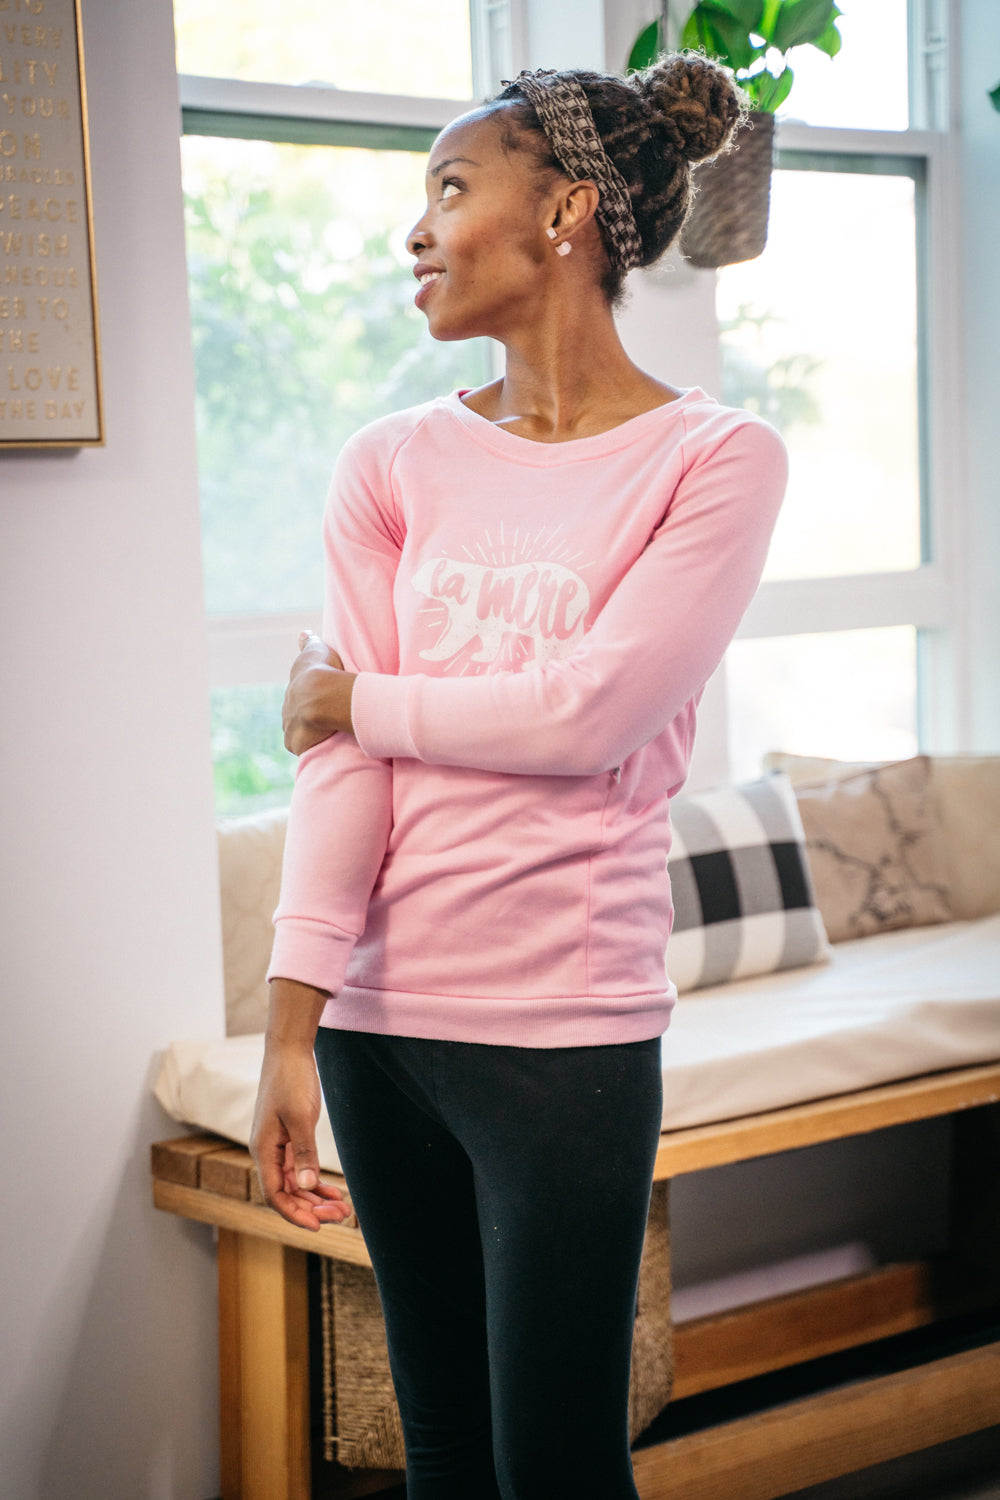 Nursing Sweatshirt For Breastfeeding, La Mere – La Mere